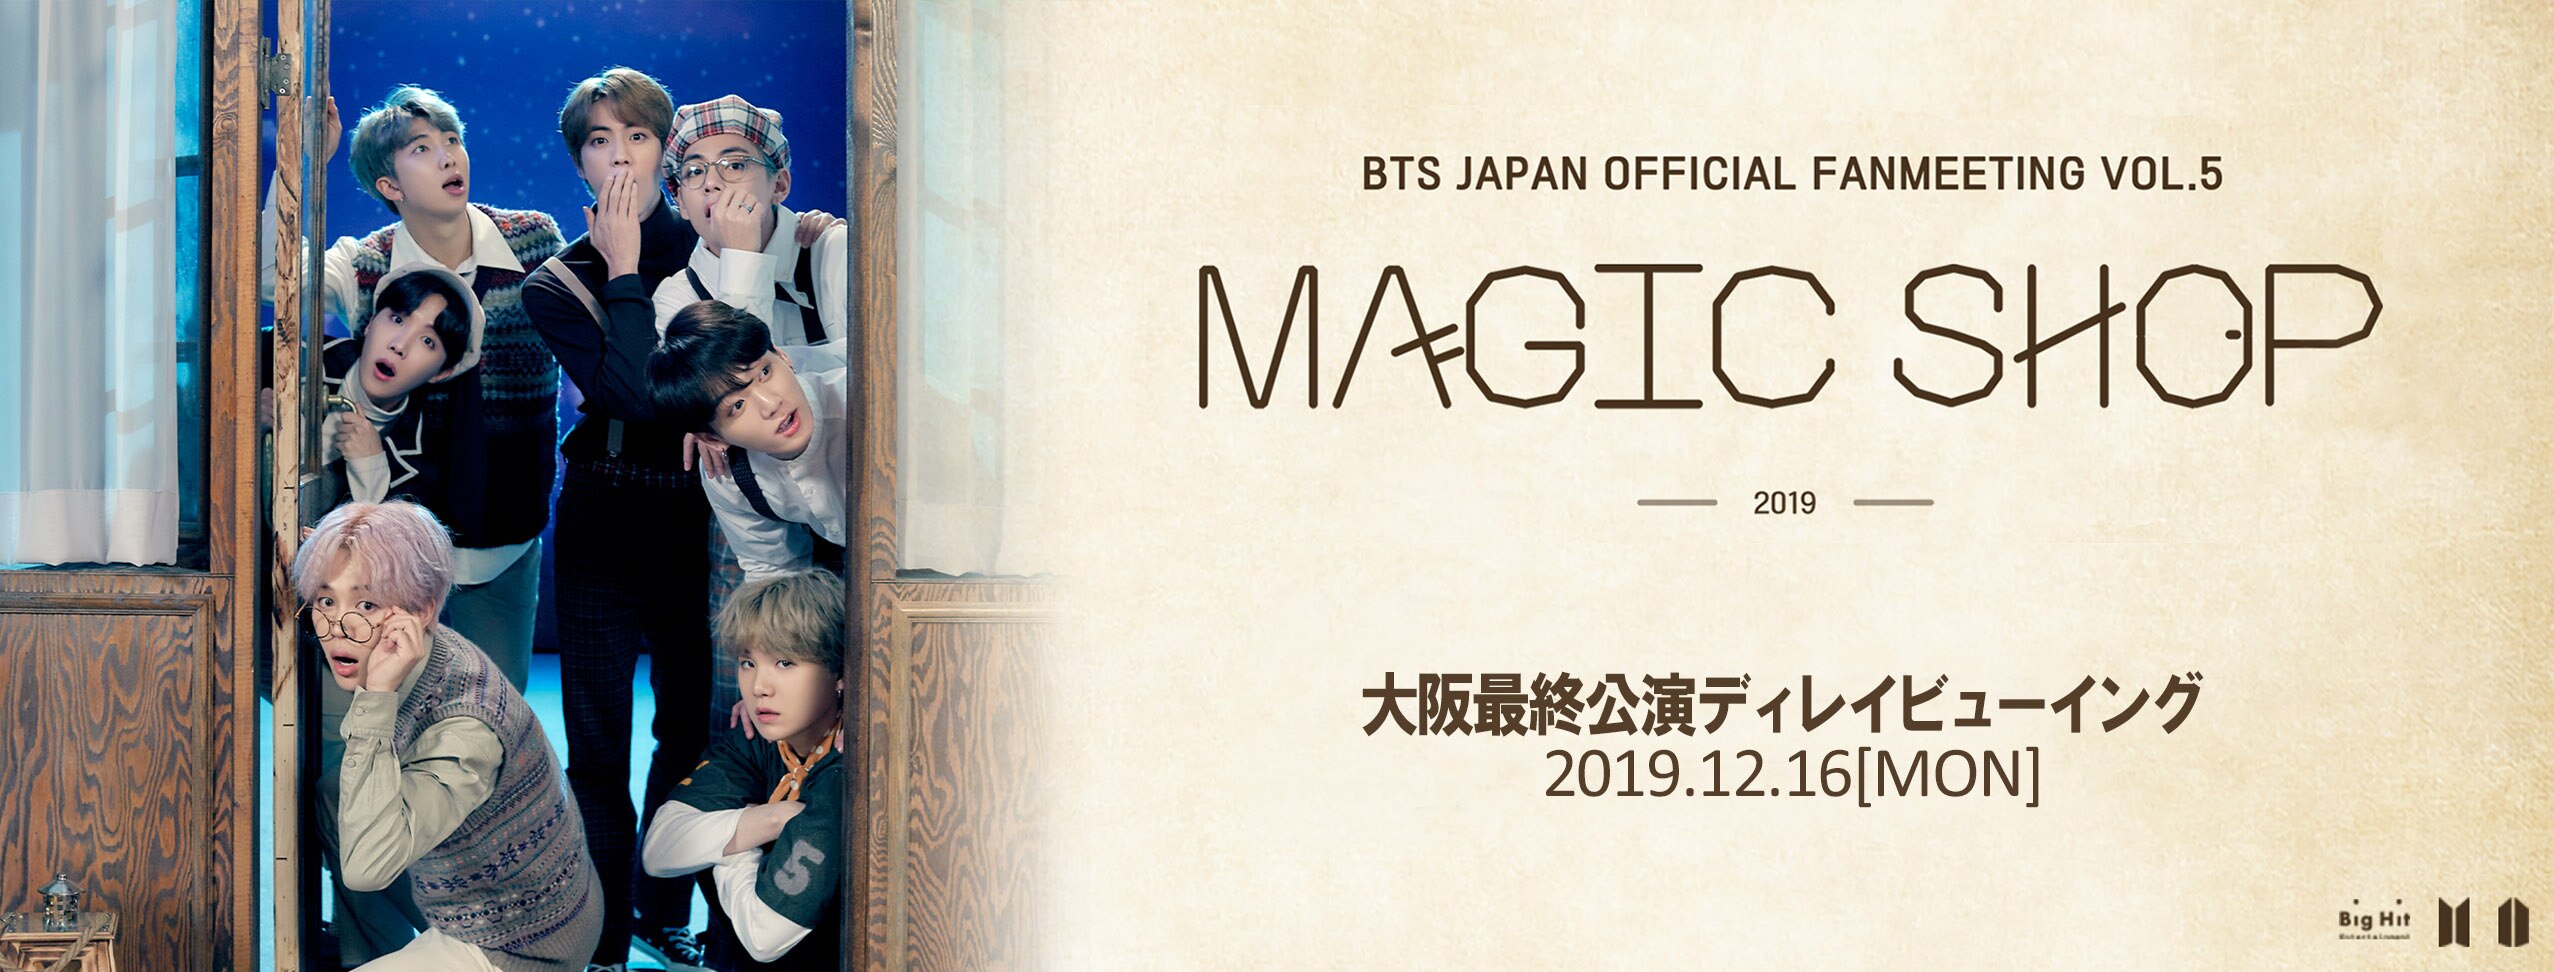 DVD/ブルーレイBTS 日本語字幕 magicshop DVD 大阪 マジショプ